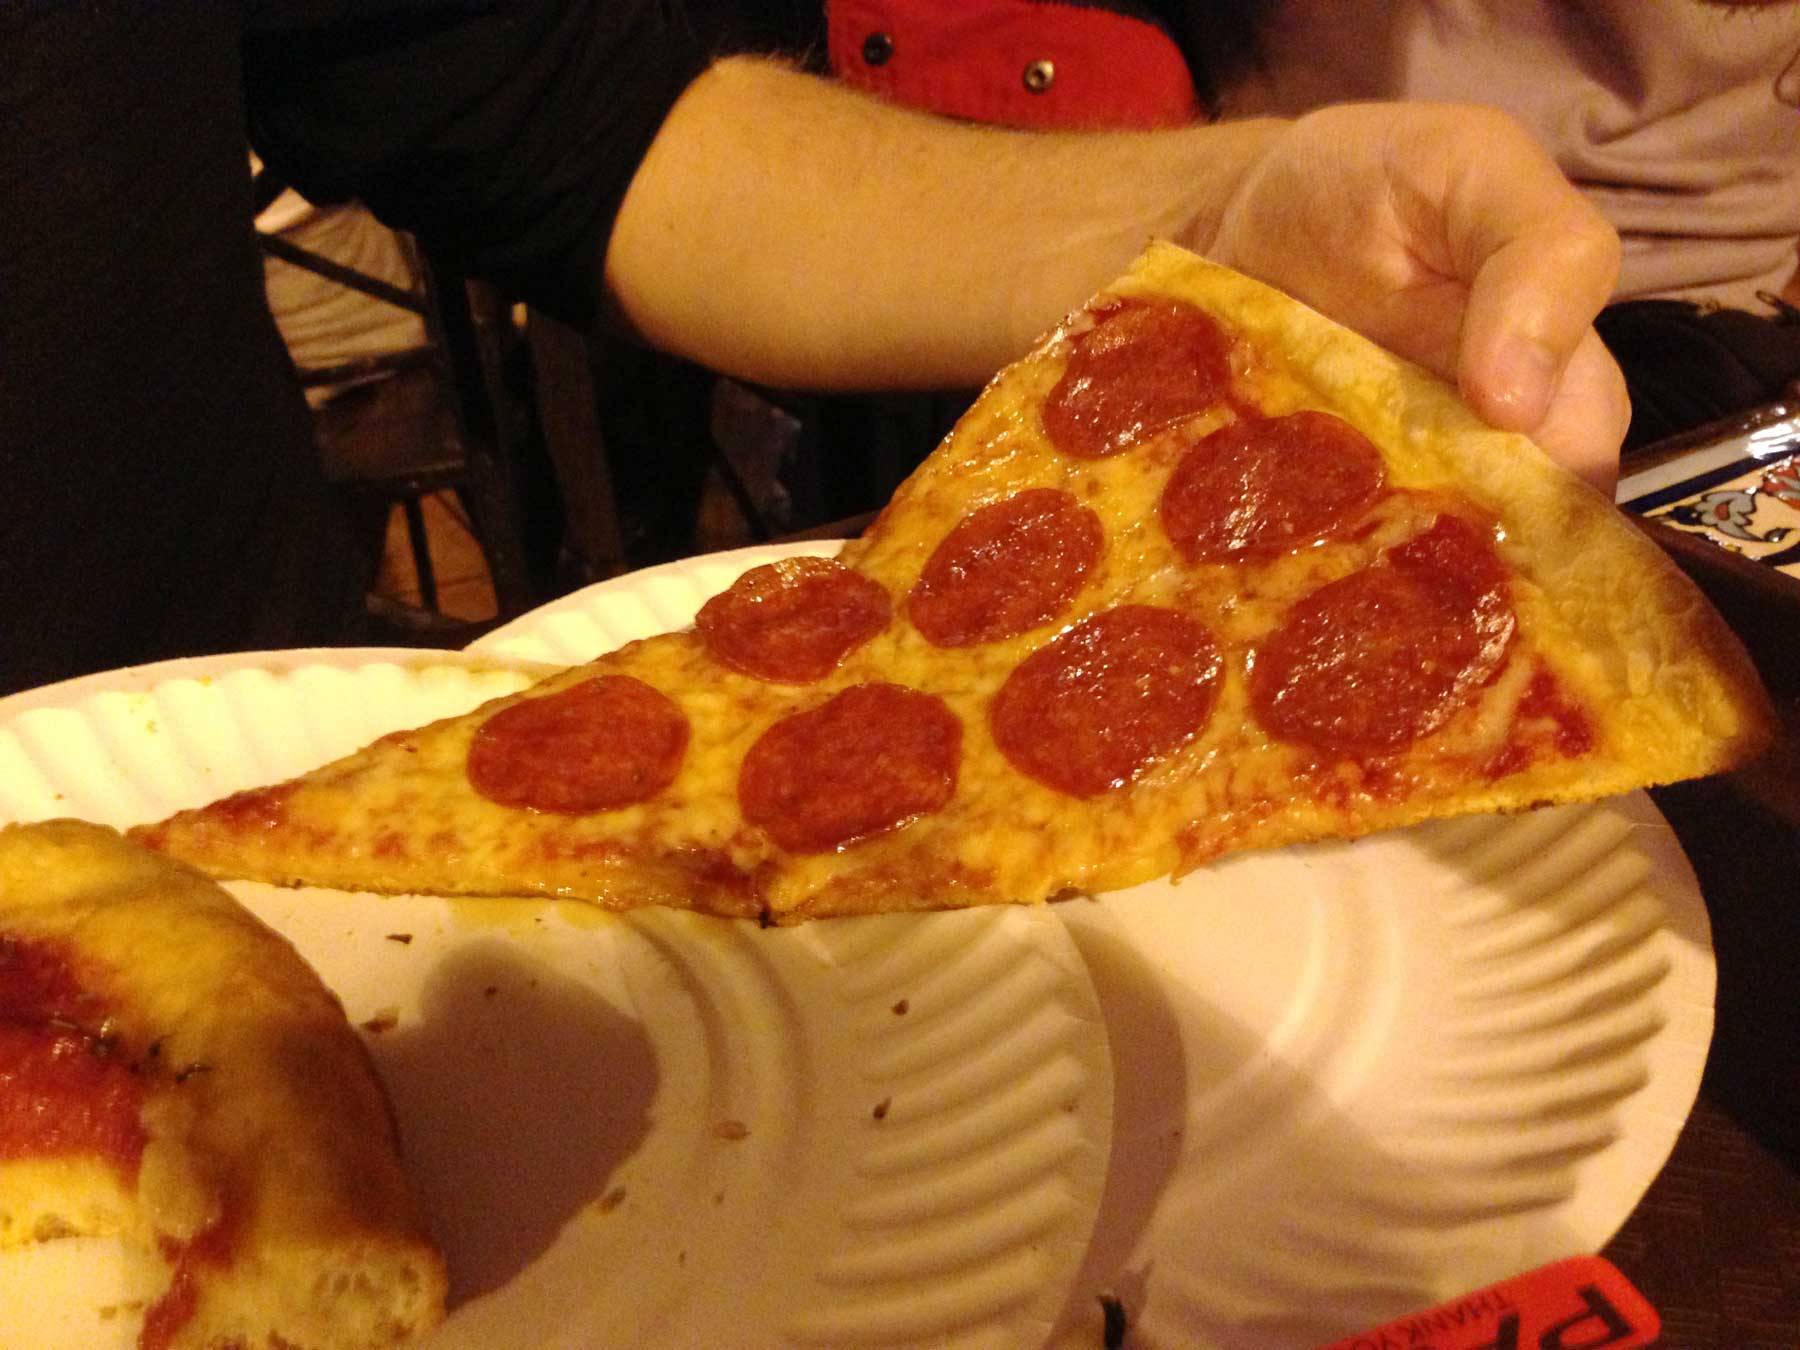 Richard’s pizza